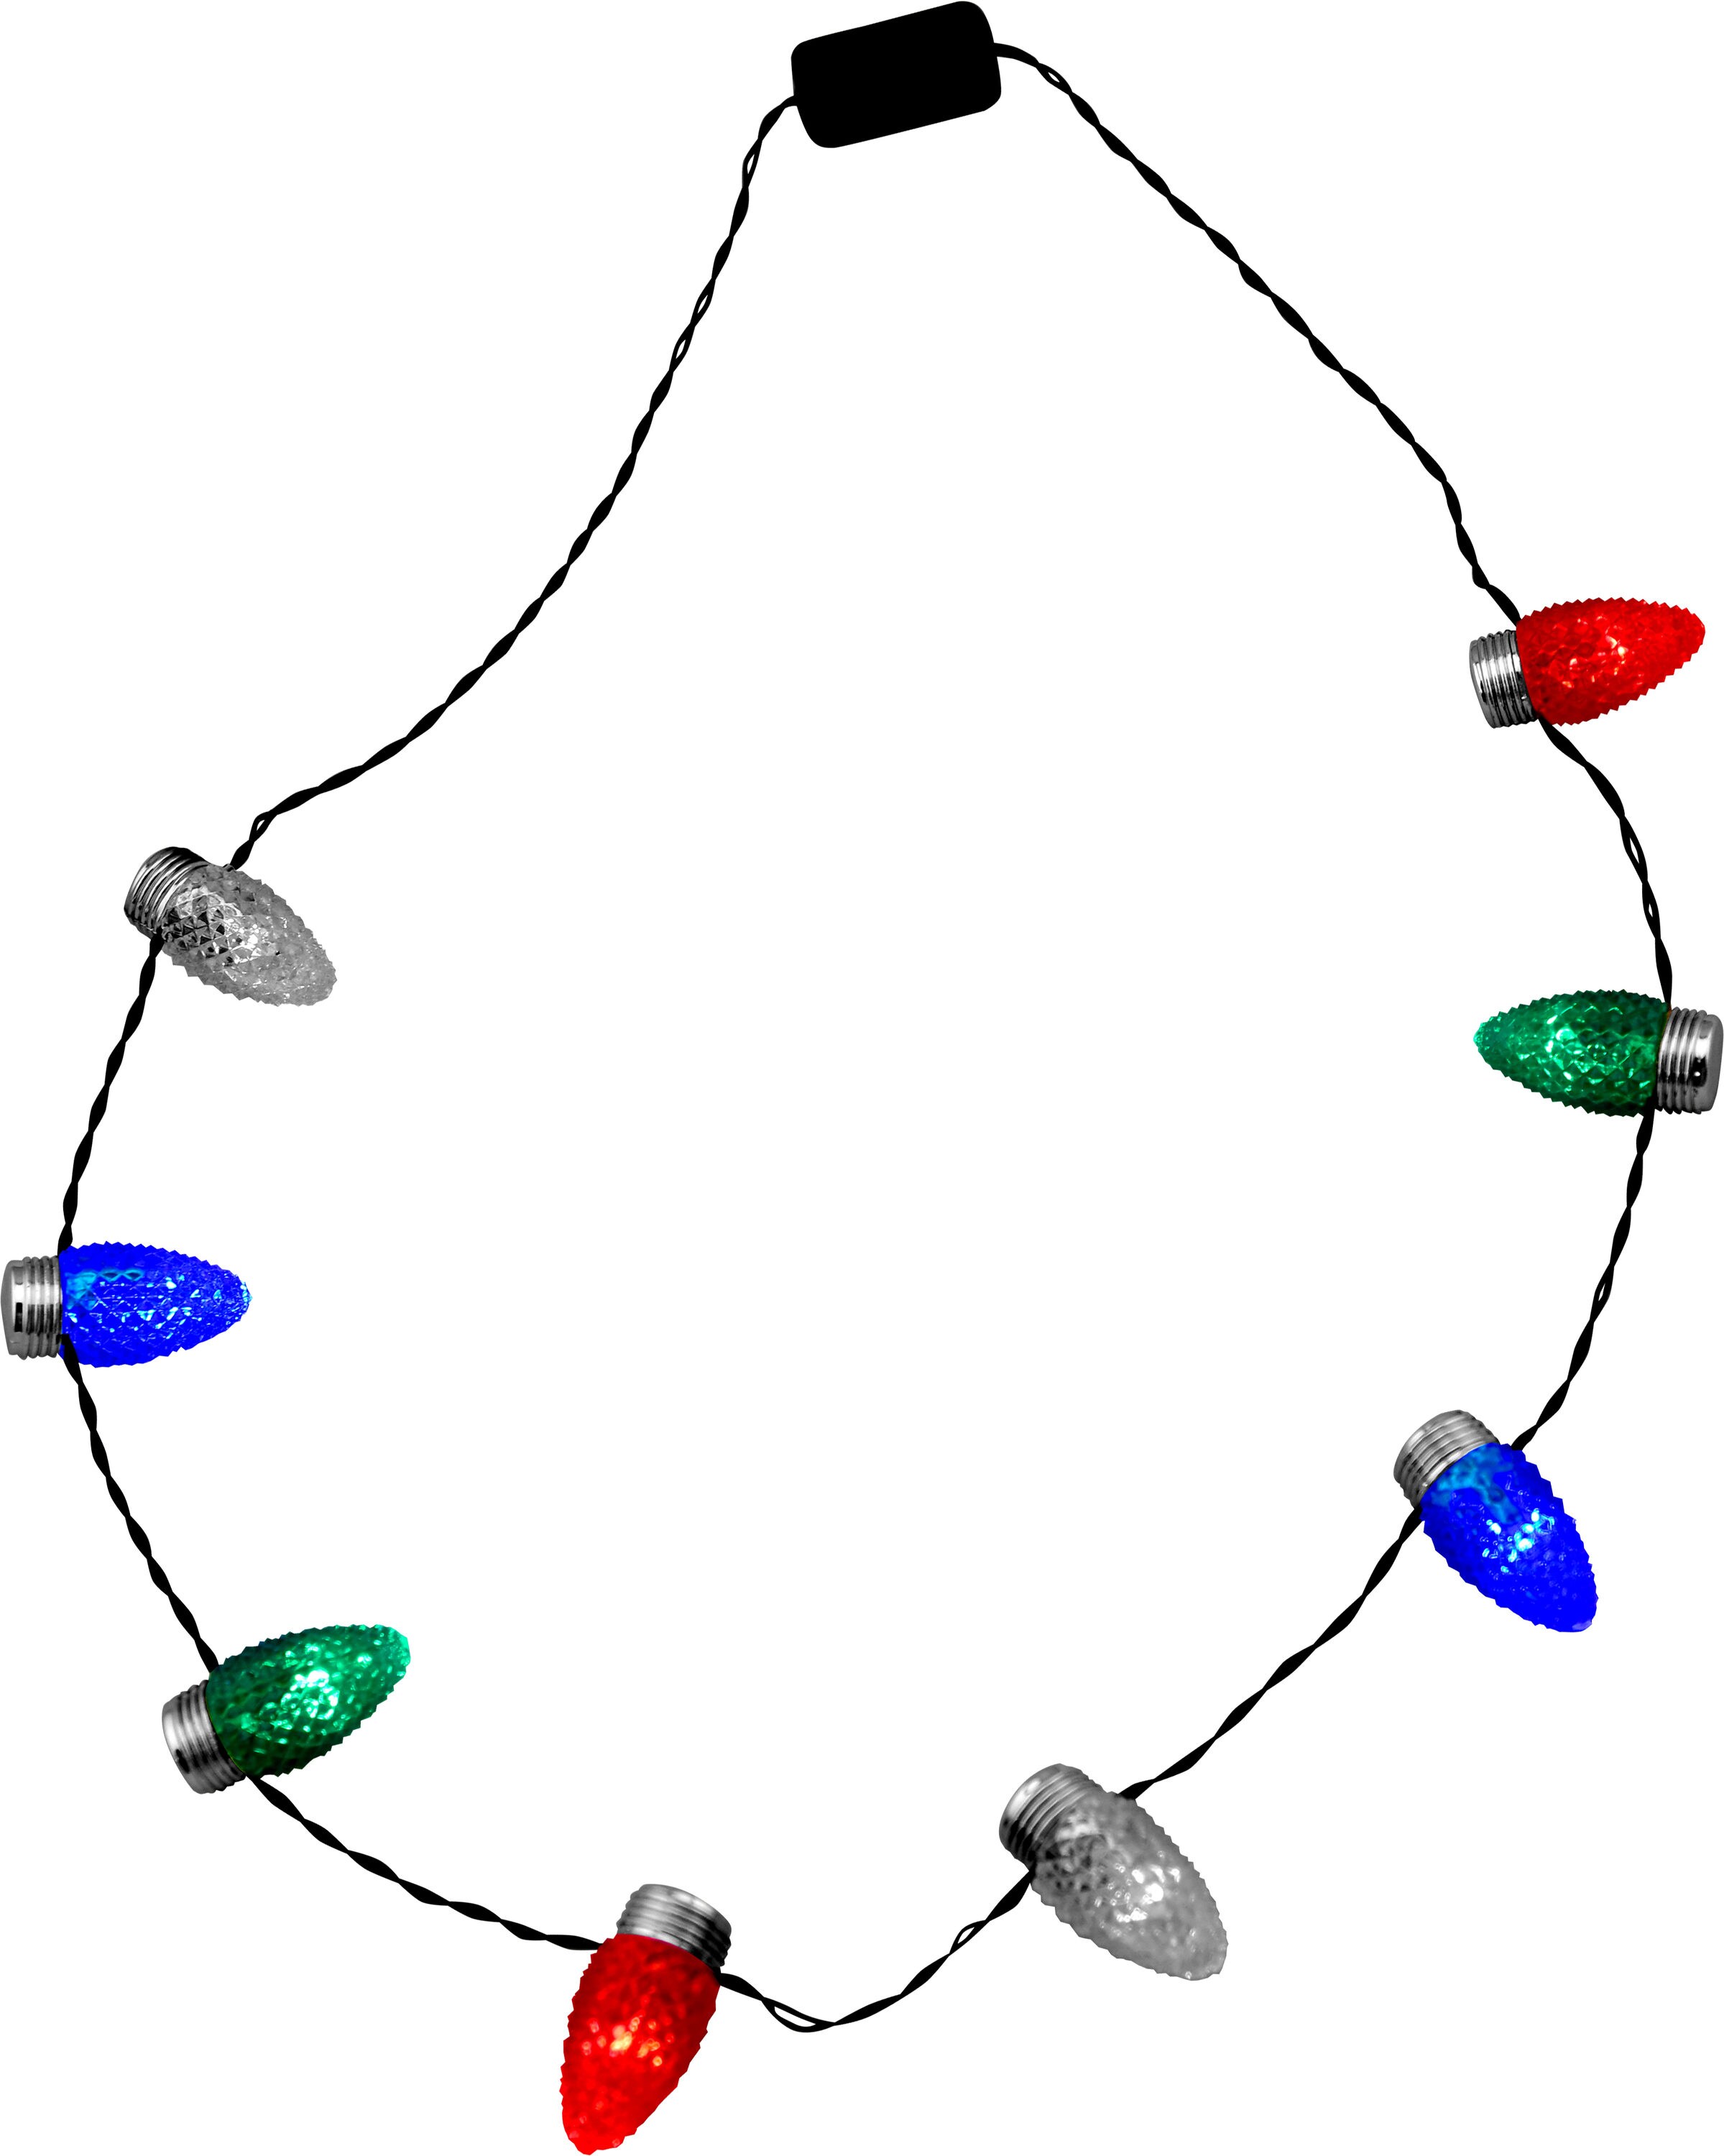 Disney Christmas Necklace - Retro Christmas Lights - LED Lig